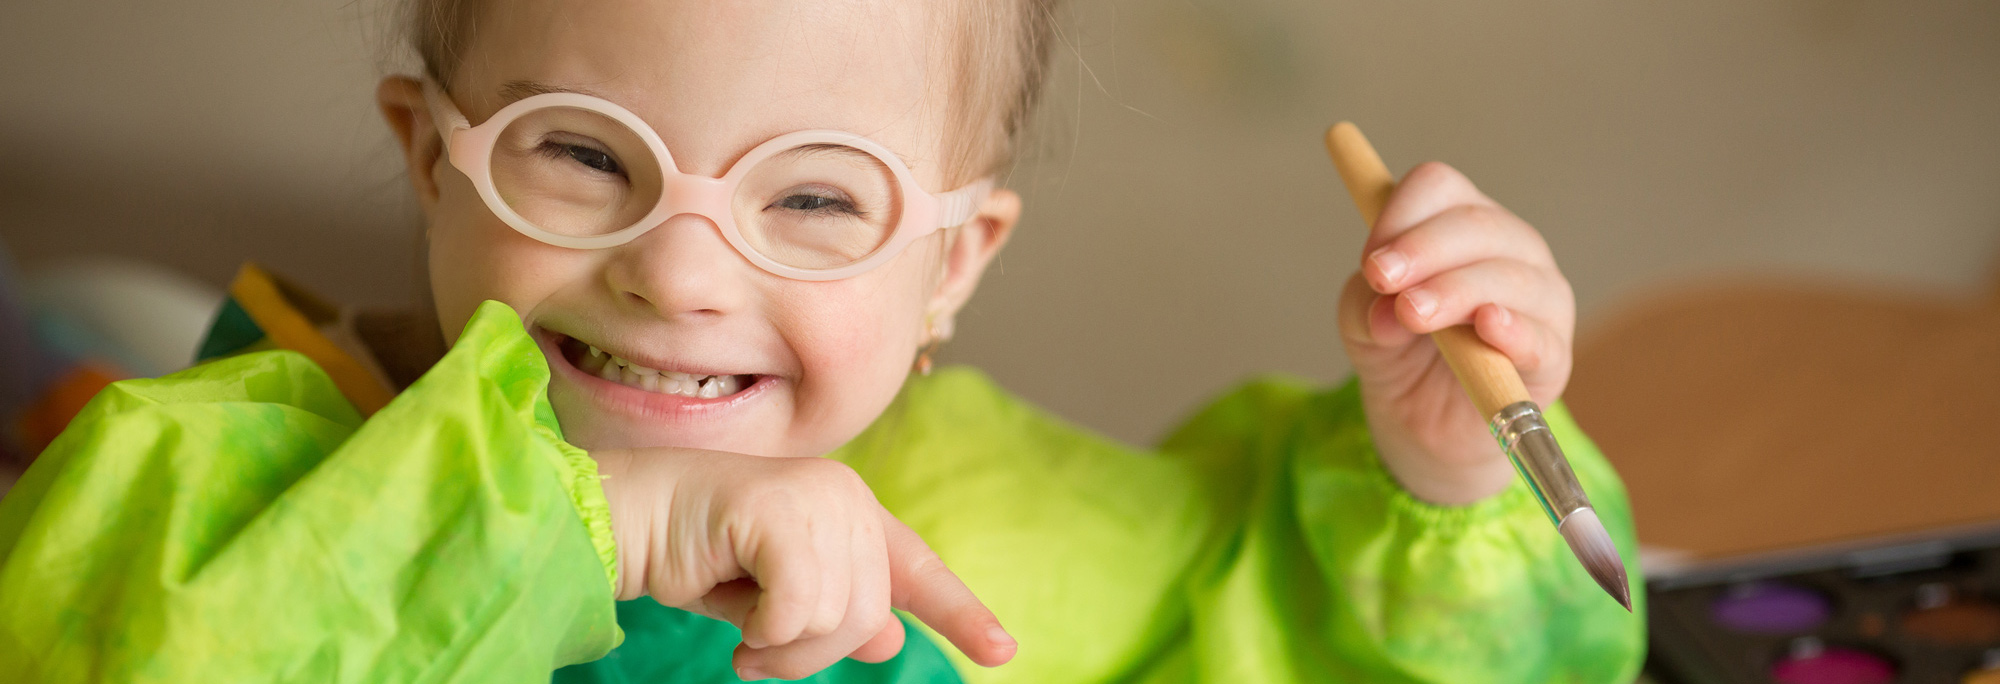 Child wearing glasses